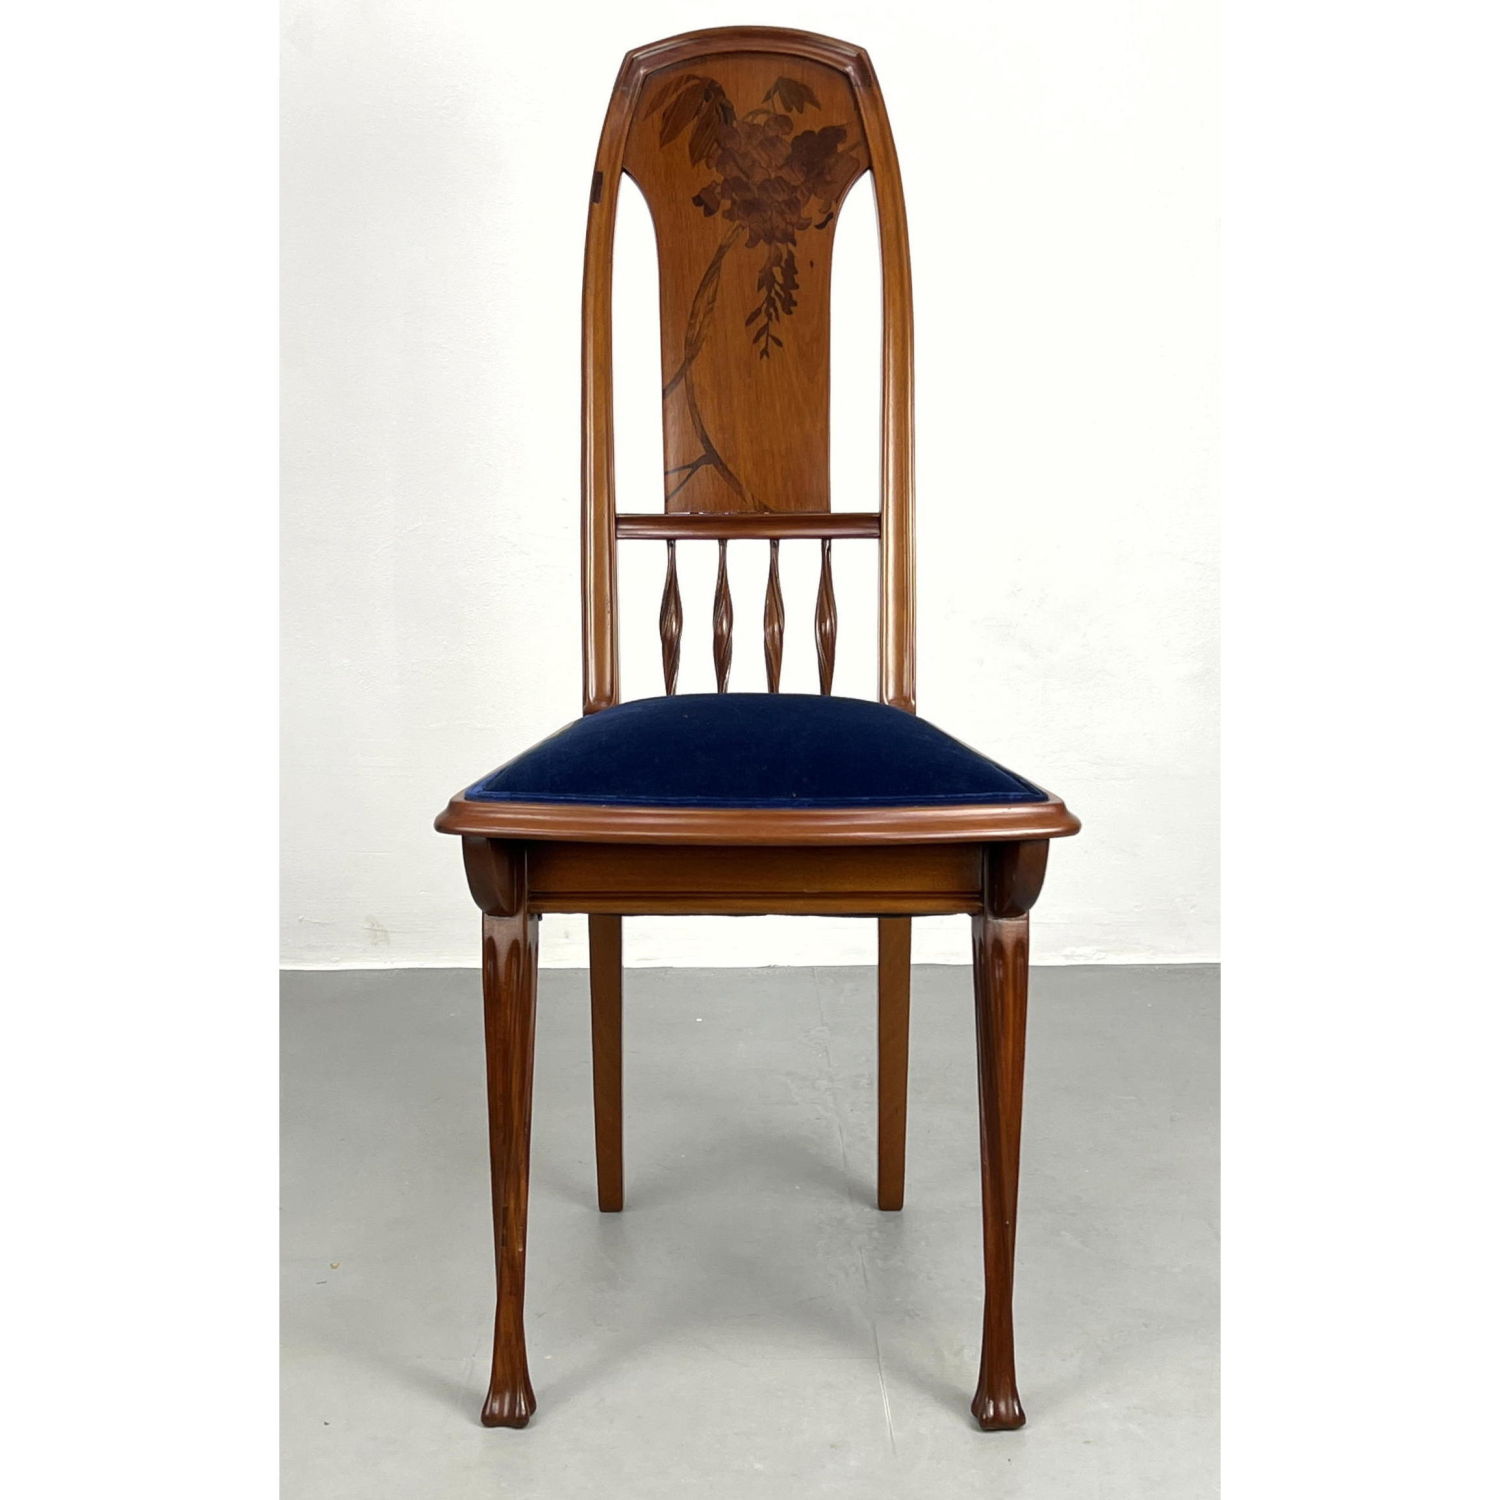 Inlaid Wood Art Nouveau Side Chair.